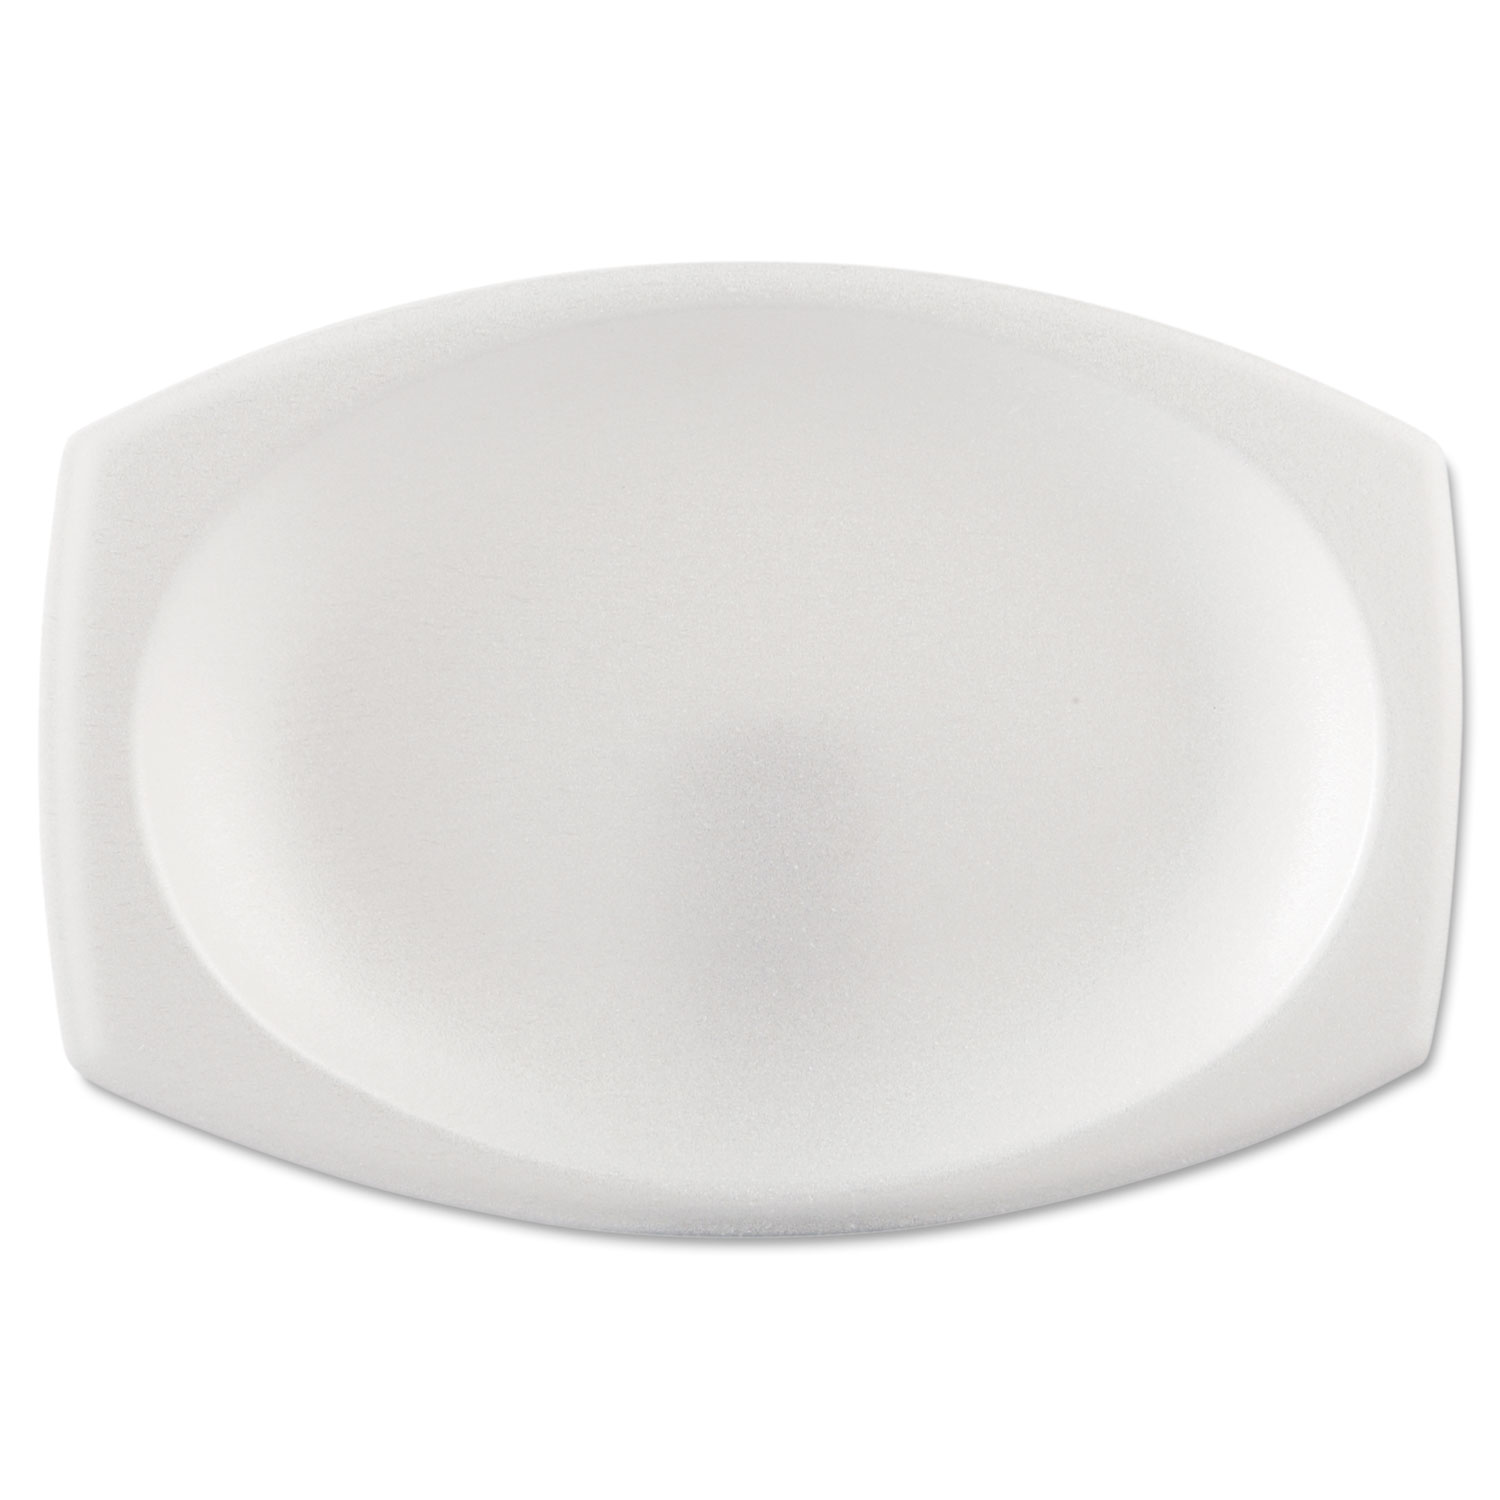  Dart 9PRWCR Foam Dinnerware, Oval Platter, 6 3/4 x 9 4/5, White, 125/Pack, 4 Packs/Carton (DCC9PRWCR) 